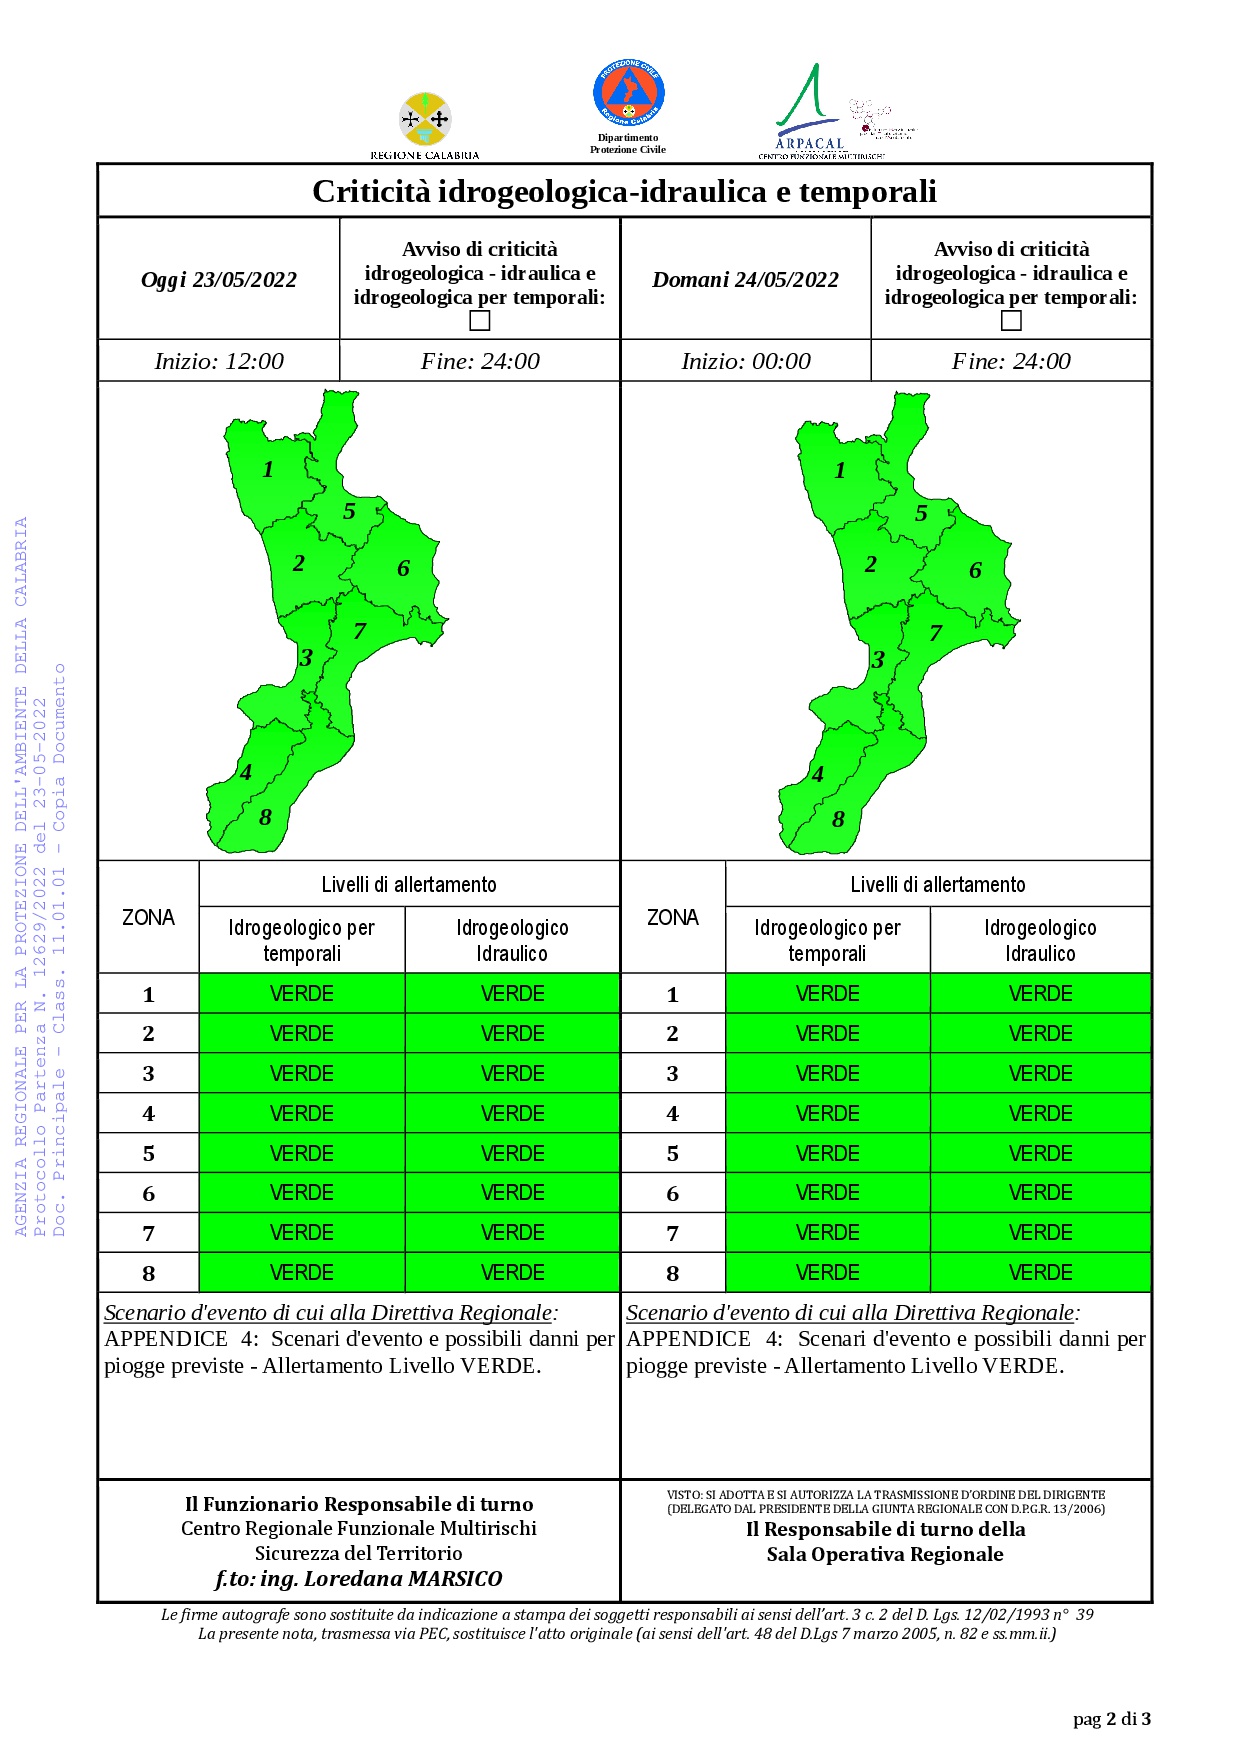 Criticità idrogeologica-idraulica e temporali in Calabria 23-05-2022